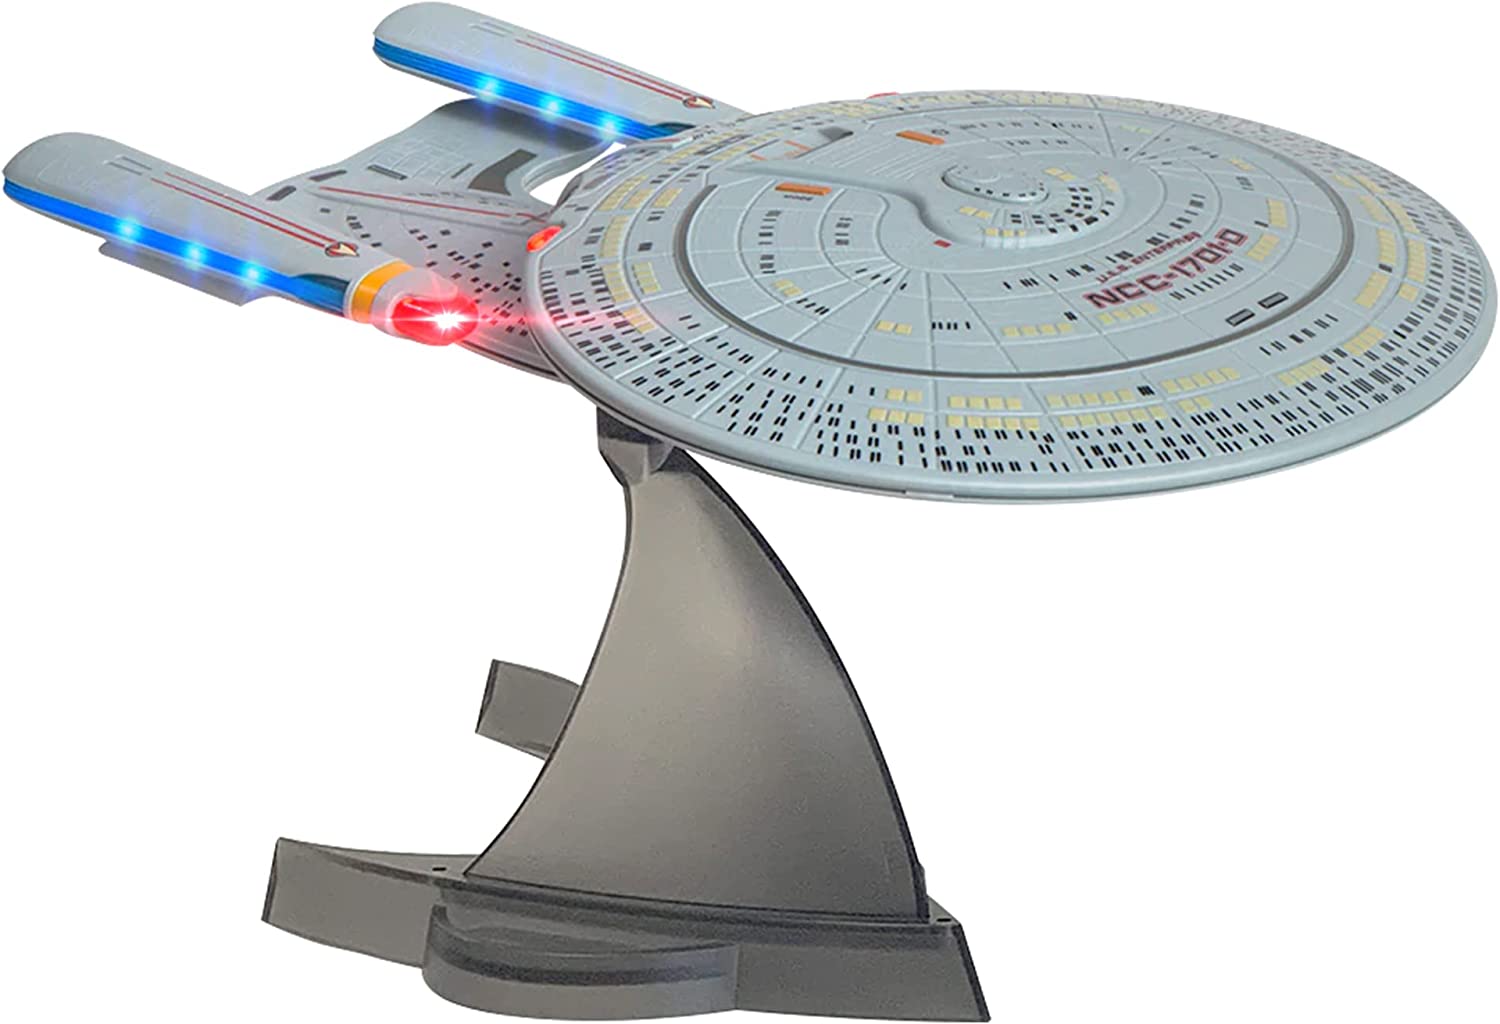 FAMETEK Star Trek Borg Cube Bluetooth Speaker with Green Illumination, Sound Effects & Borg Quotes